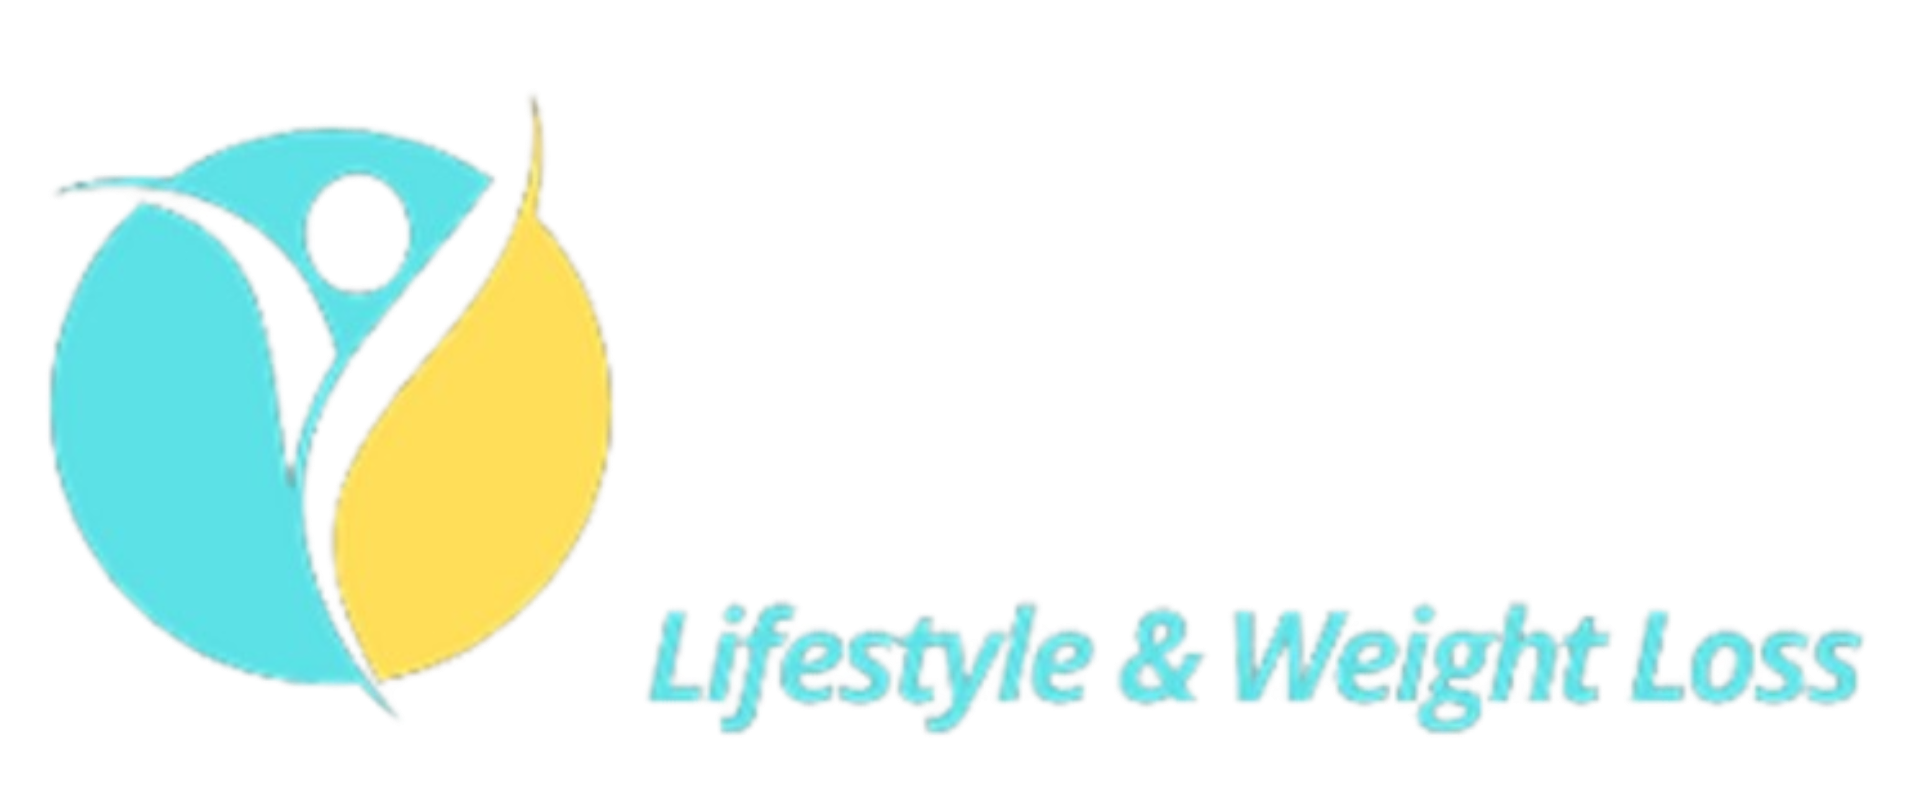 Mini Health Clinic Logo